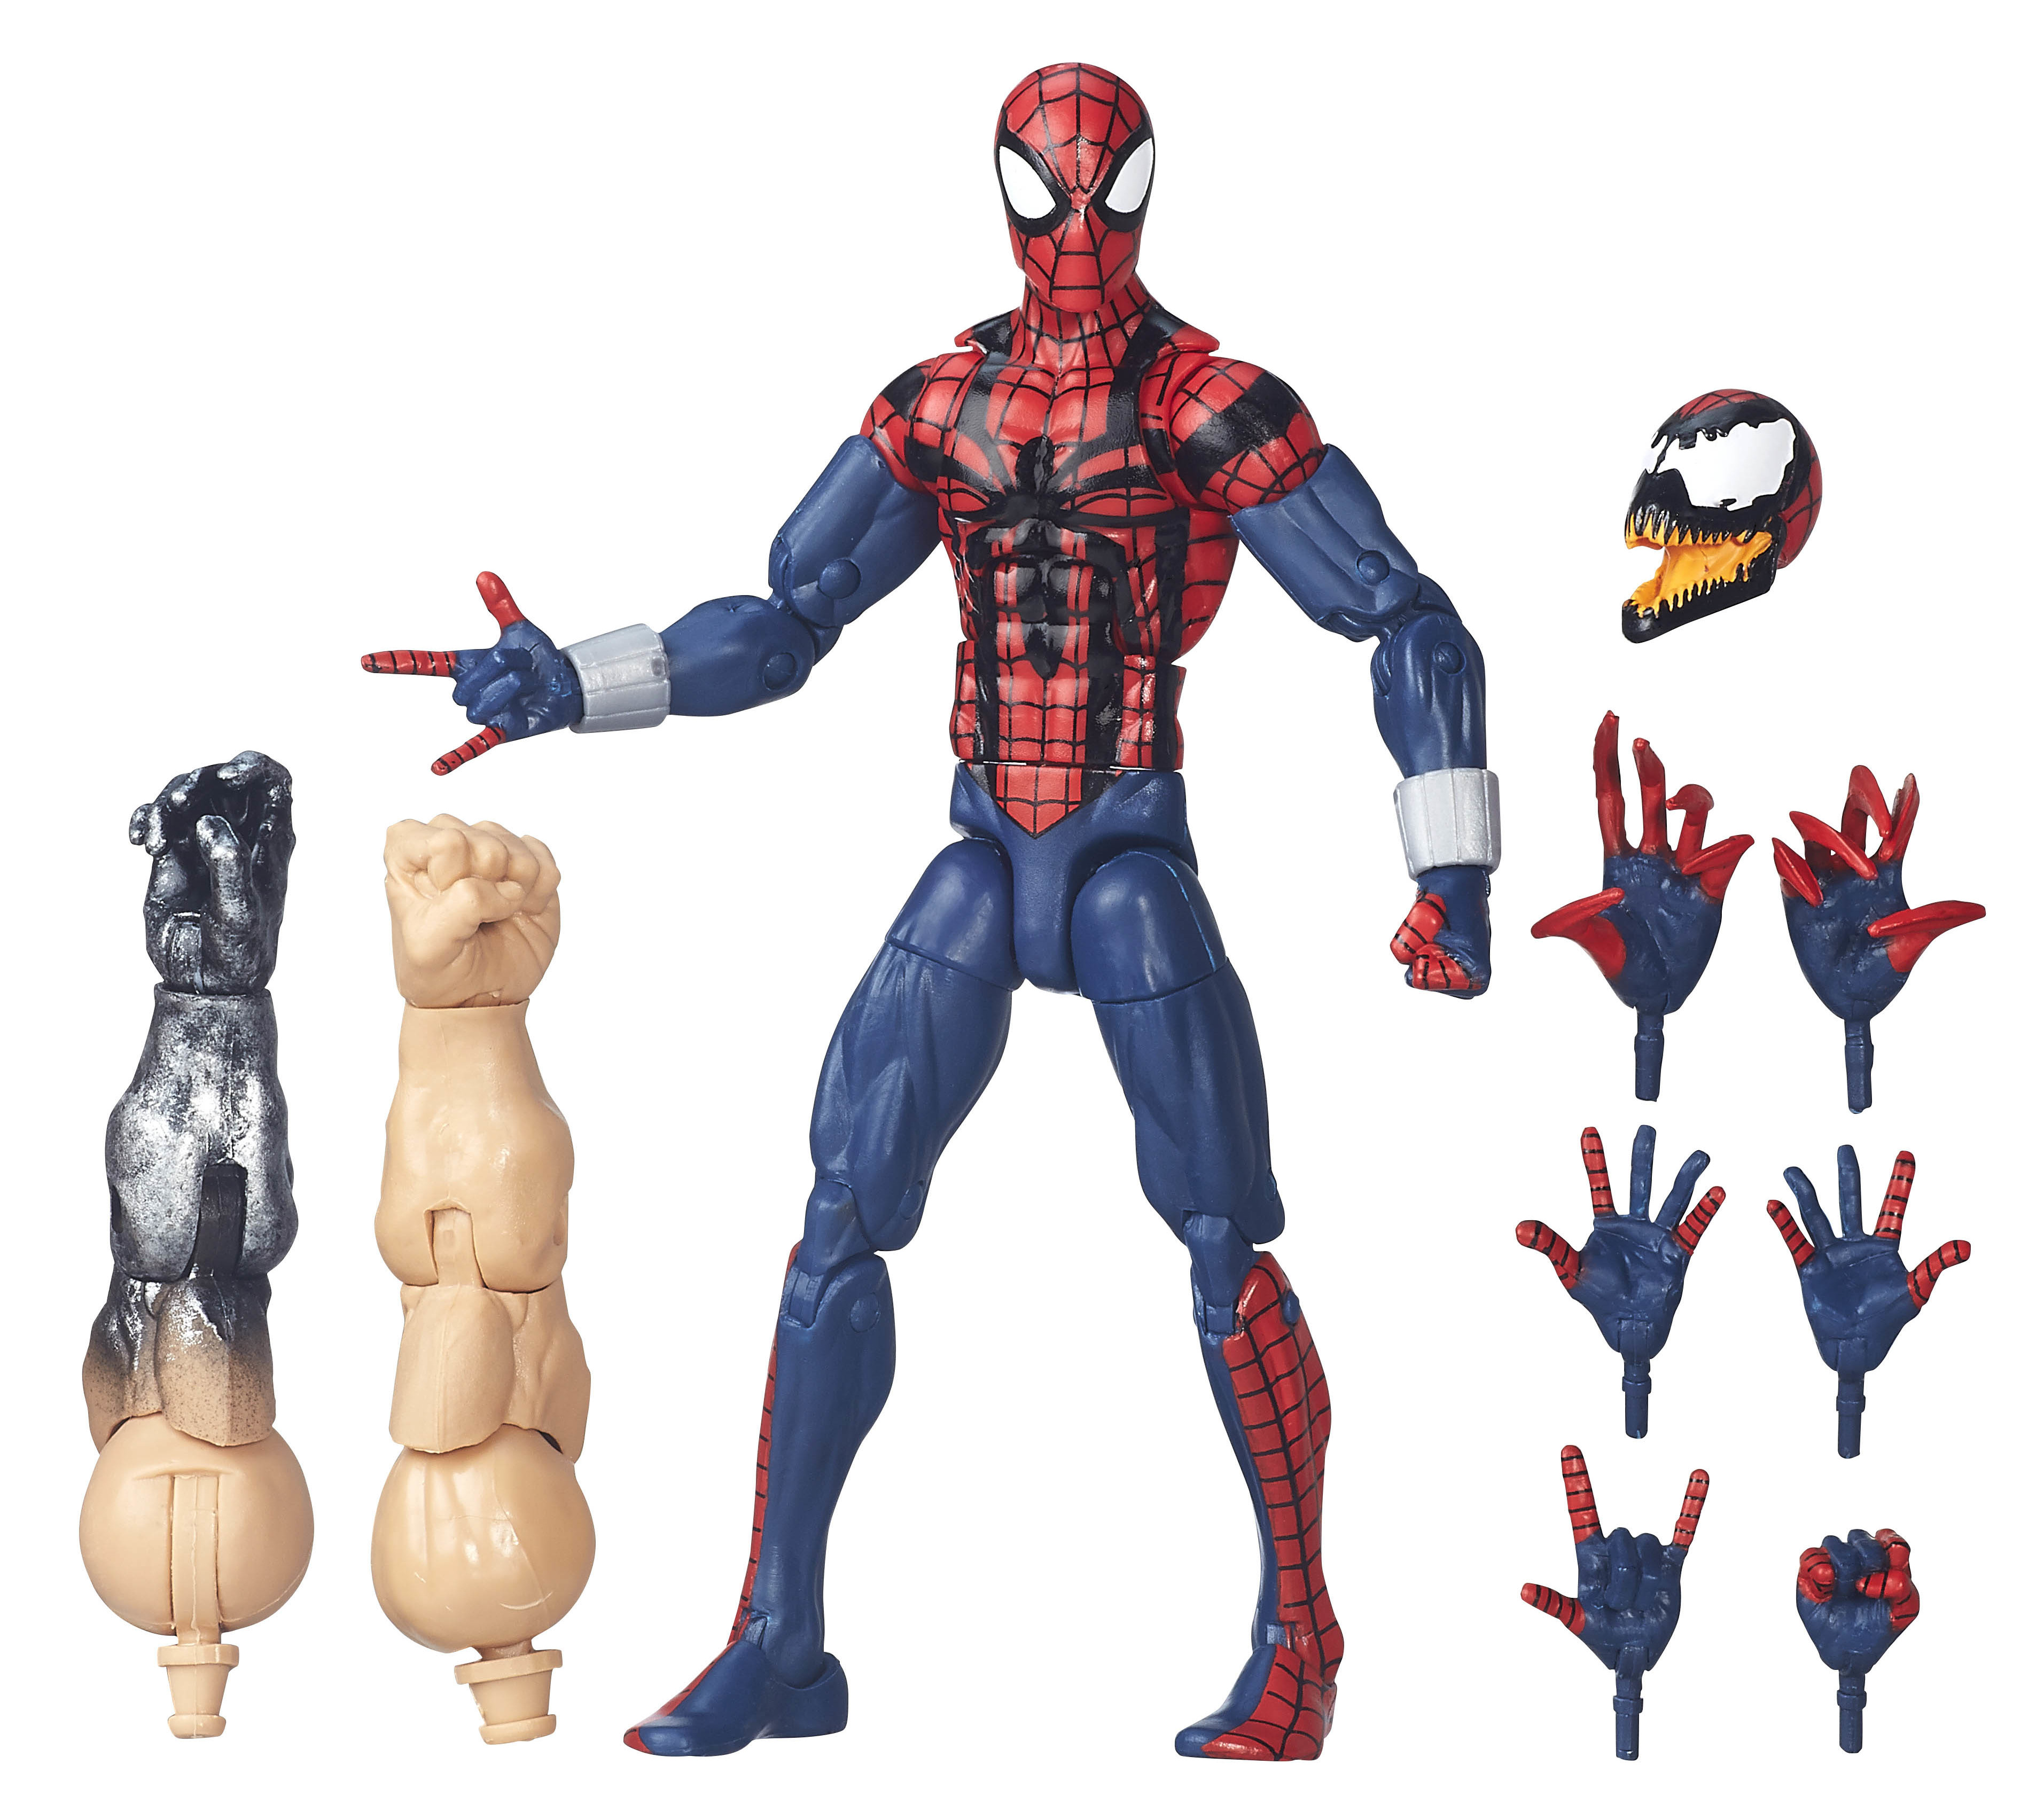 2016 Marvel Legends Spider-Man Wave 1 Packaged Photos! - Marvel Toy News